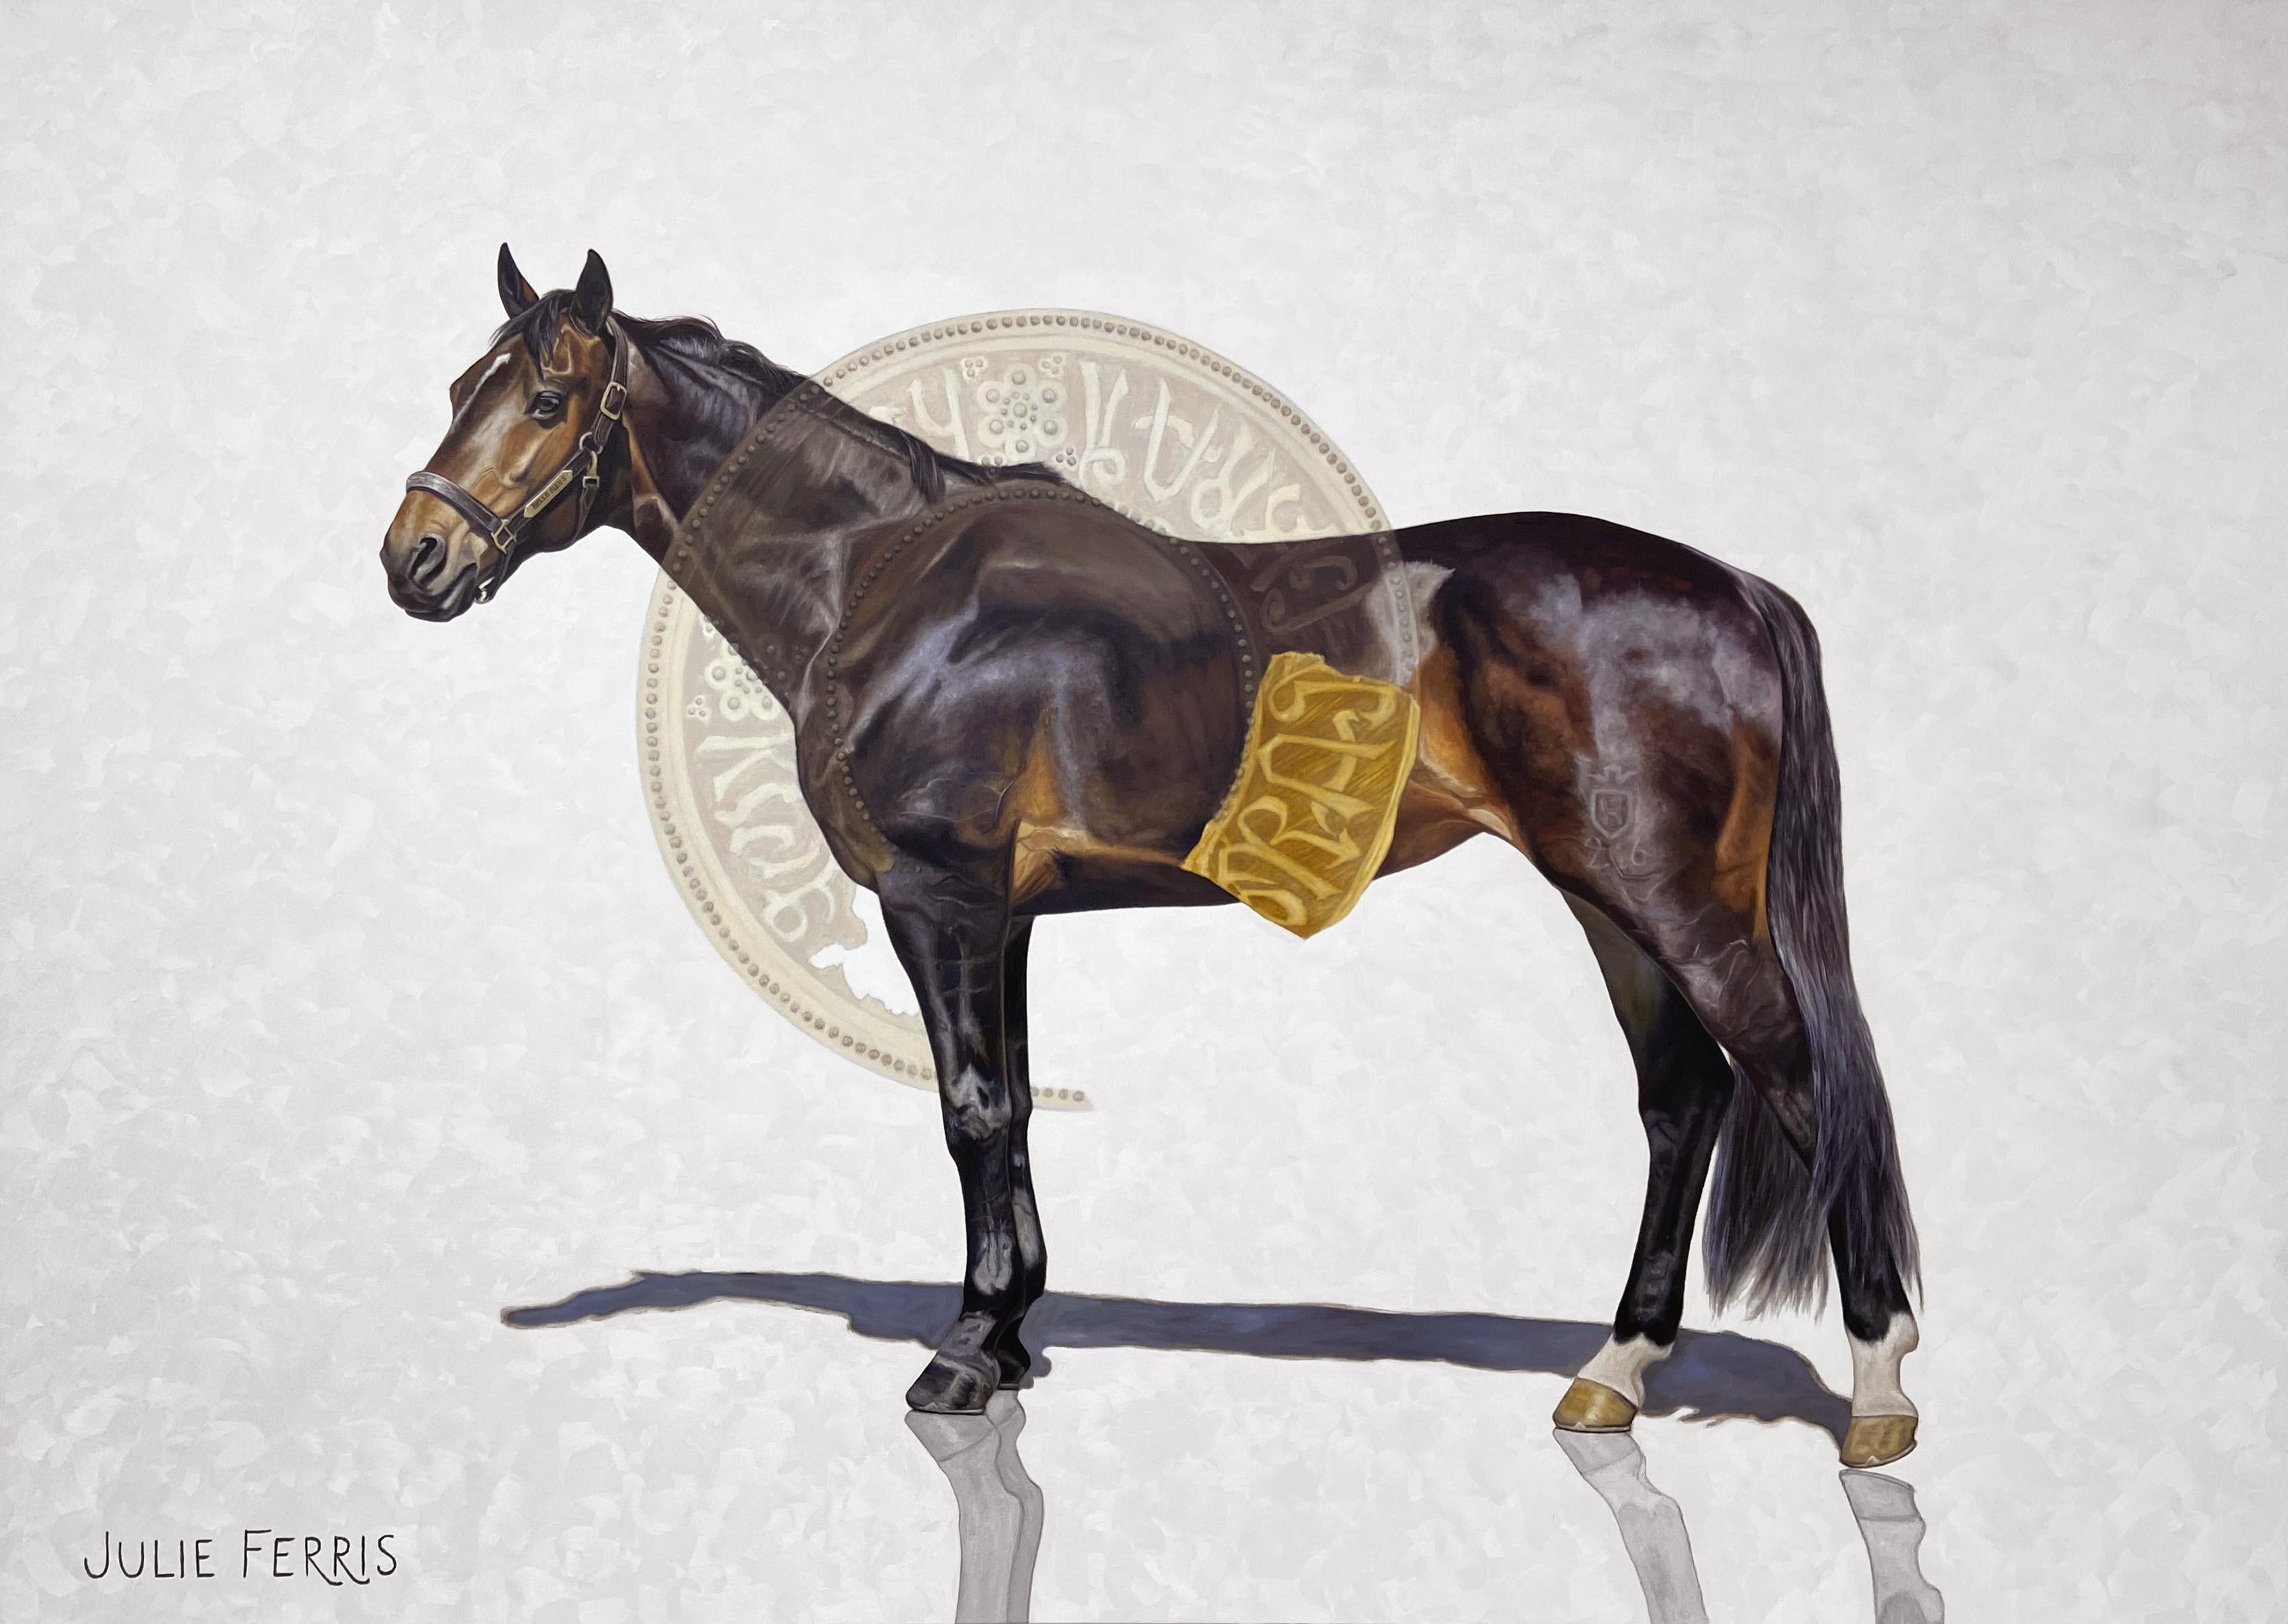 Julie Ferris Figurative Painting - "Divina Domina" - American Realism - Equine - Horse Painting - Rosa Bonheur